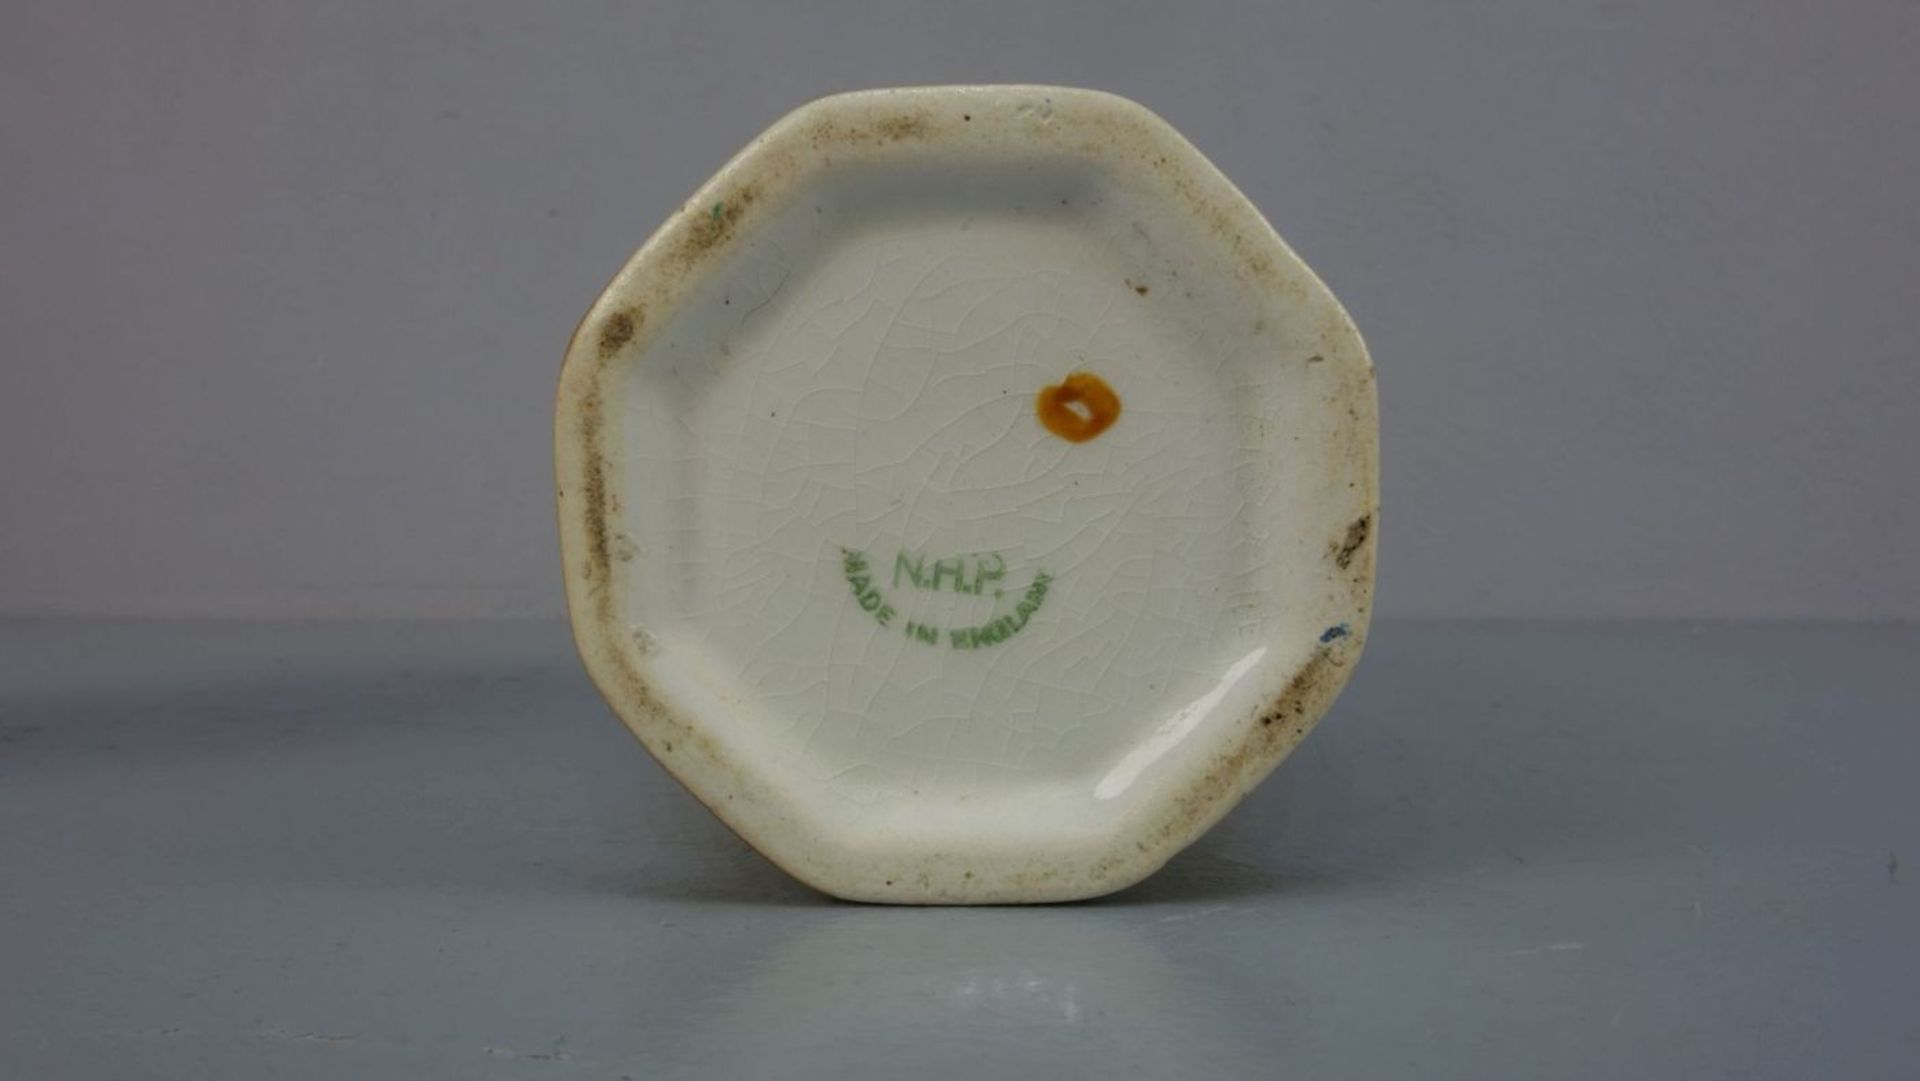 PAAR VASEN, Keramik, England um 1940/50; unter dem Stand mit unterglasurgrüner Manufakturmarke NHP - - Image 5 of 6